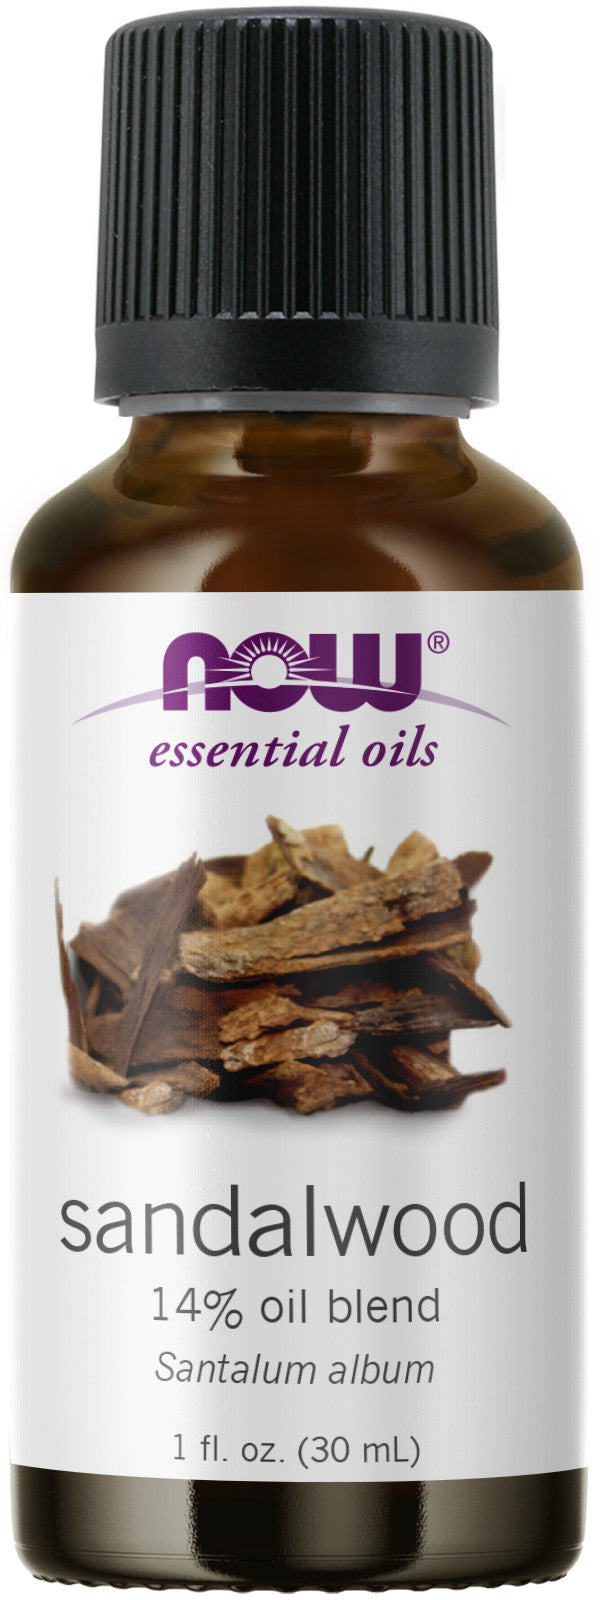 Sandalwood Oil Blend 1 fl oz (30 ml) | By Now Essential Oils - Best Price